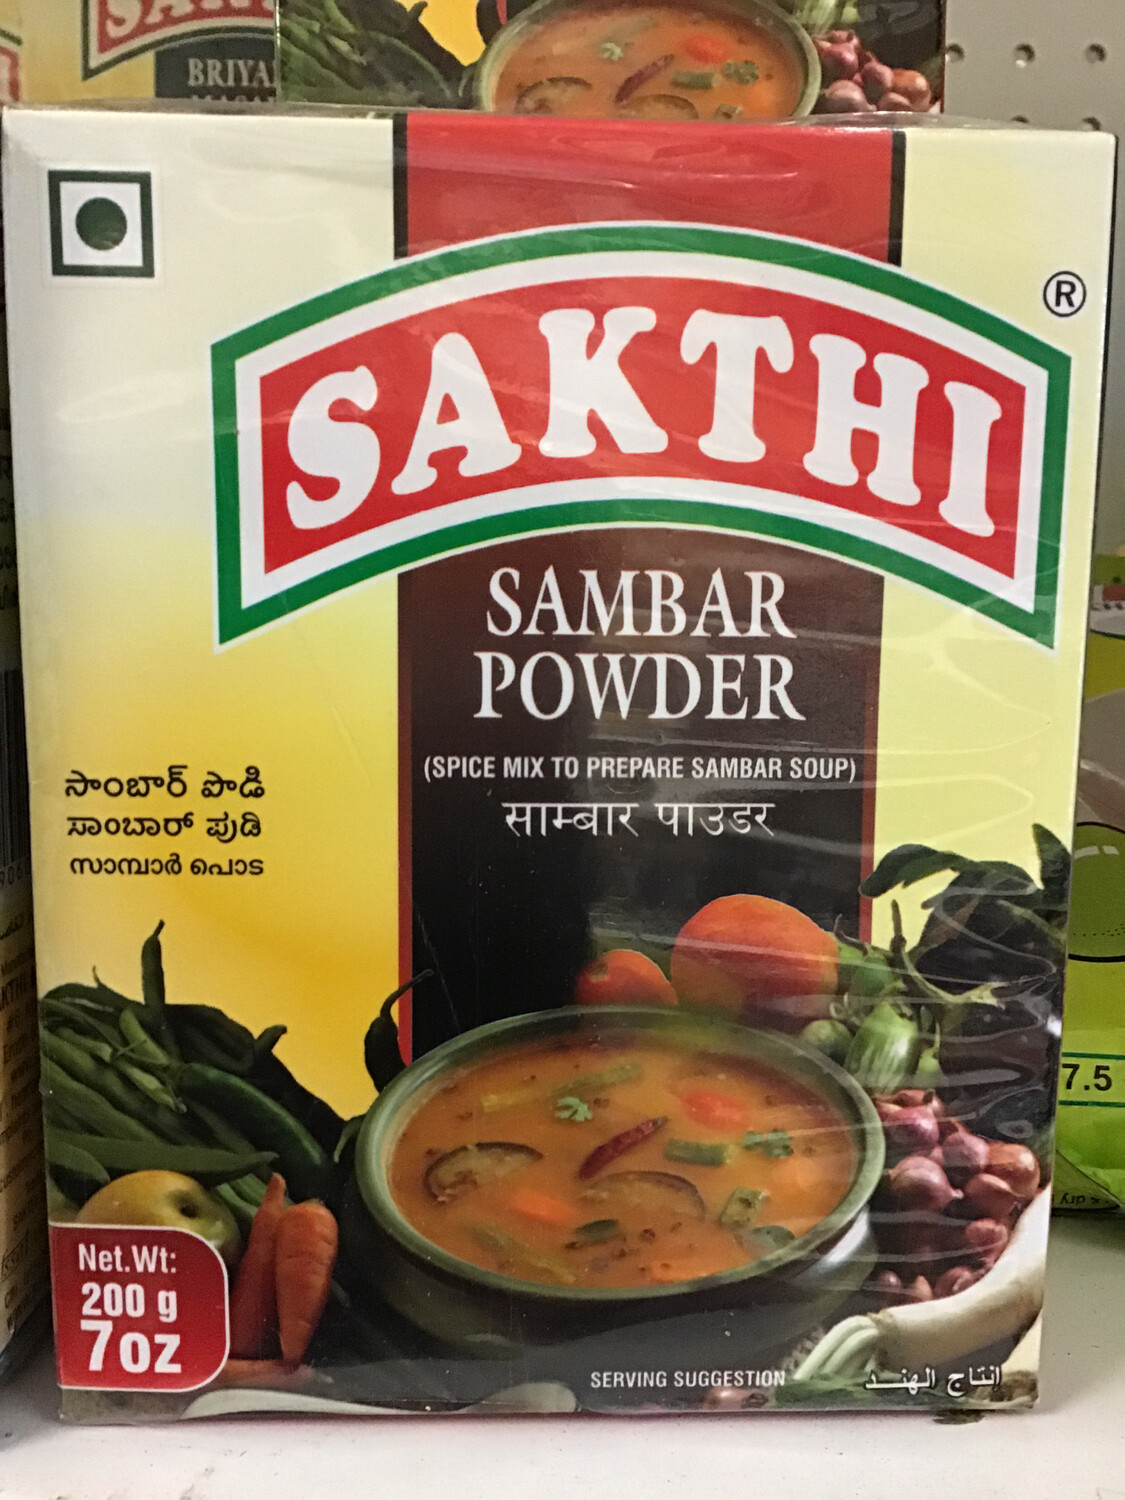 SAKTHI SAMBHAR POWDER 200gm